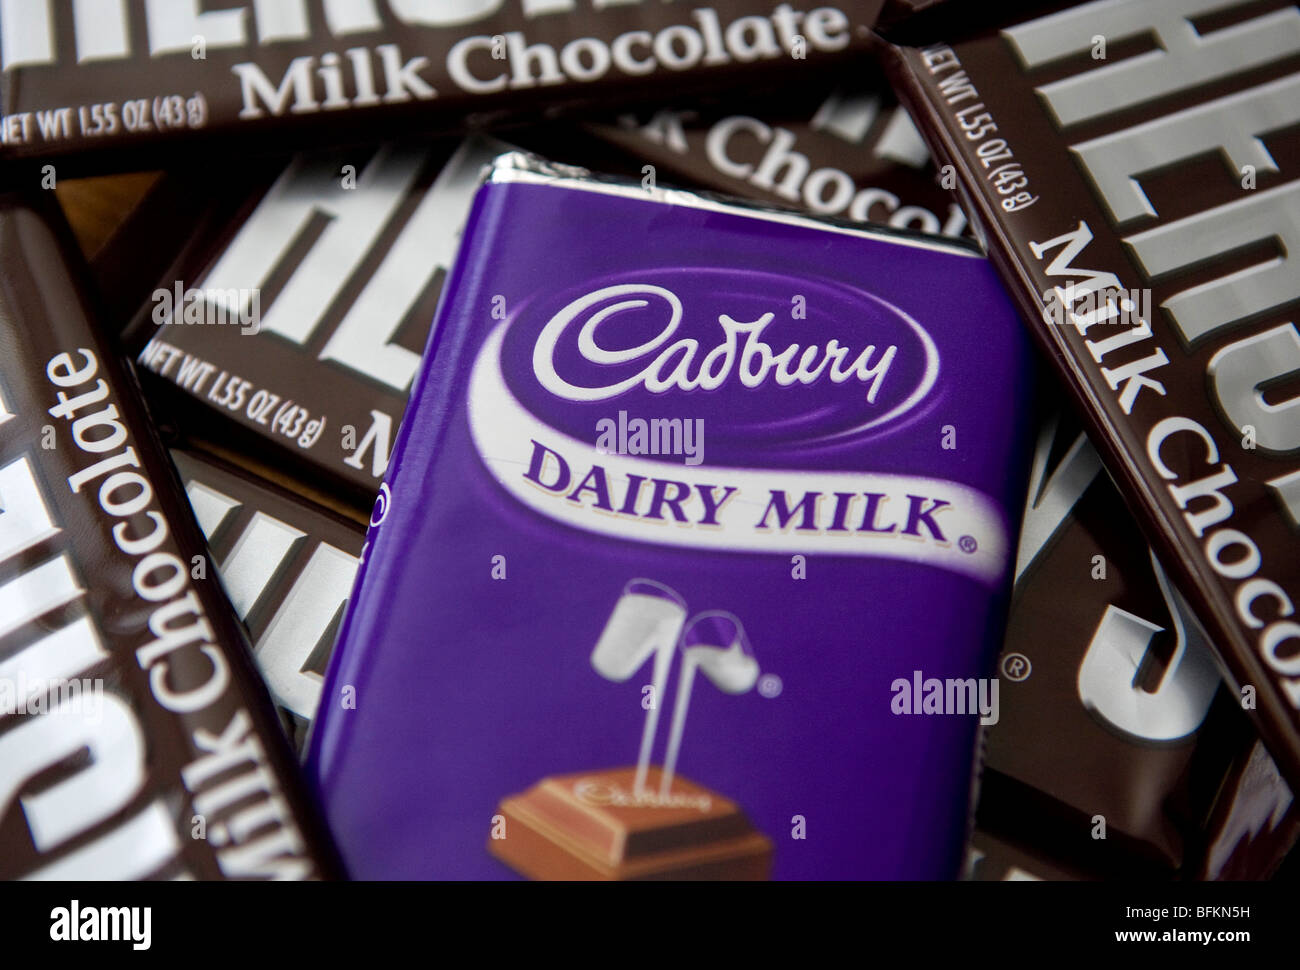 Les chocolats HERSHEY'S et Cadbury. Banque D'Images